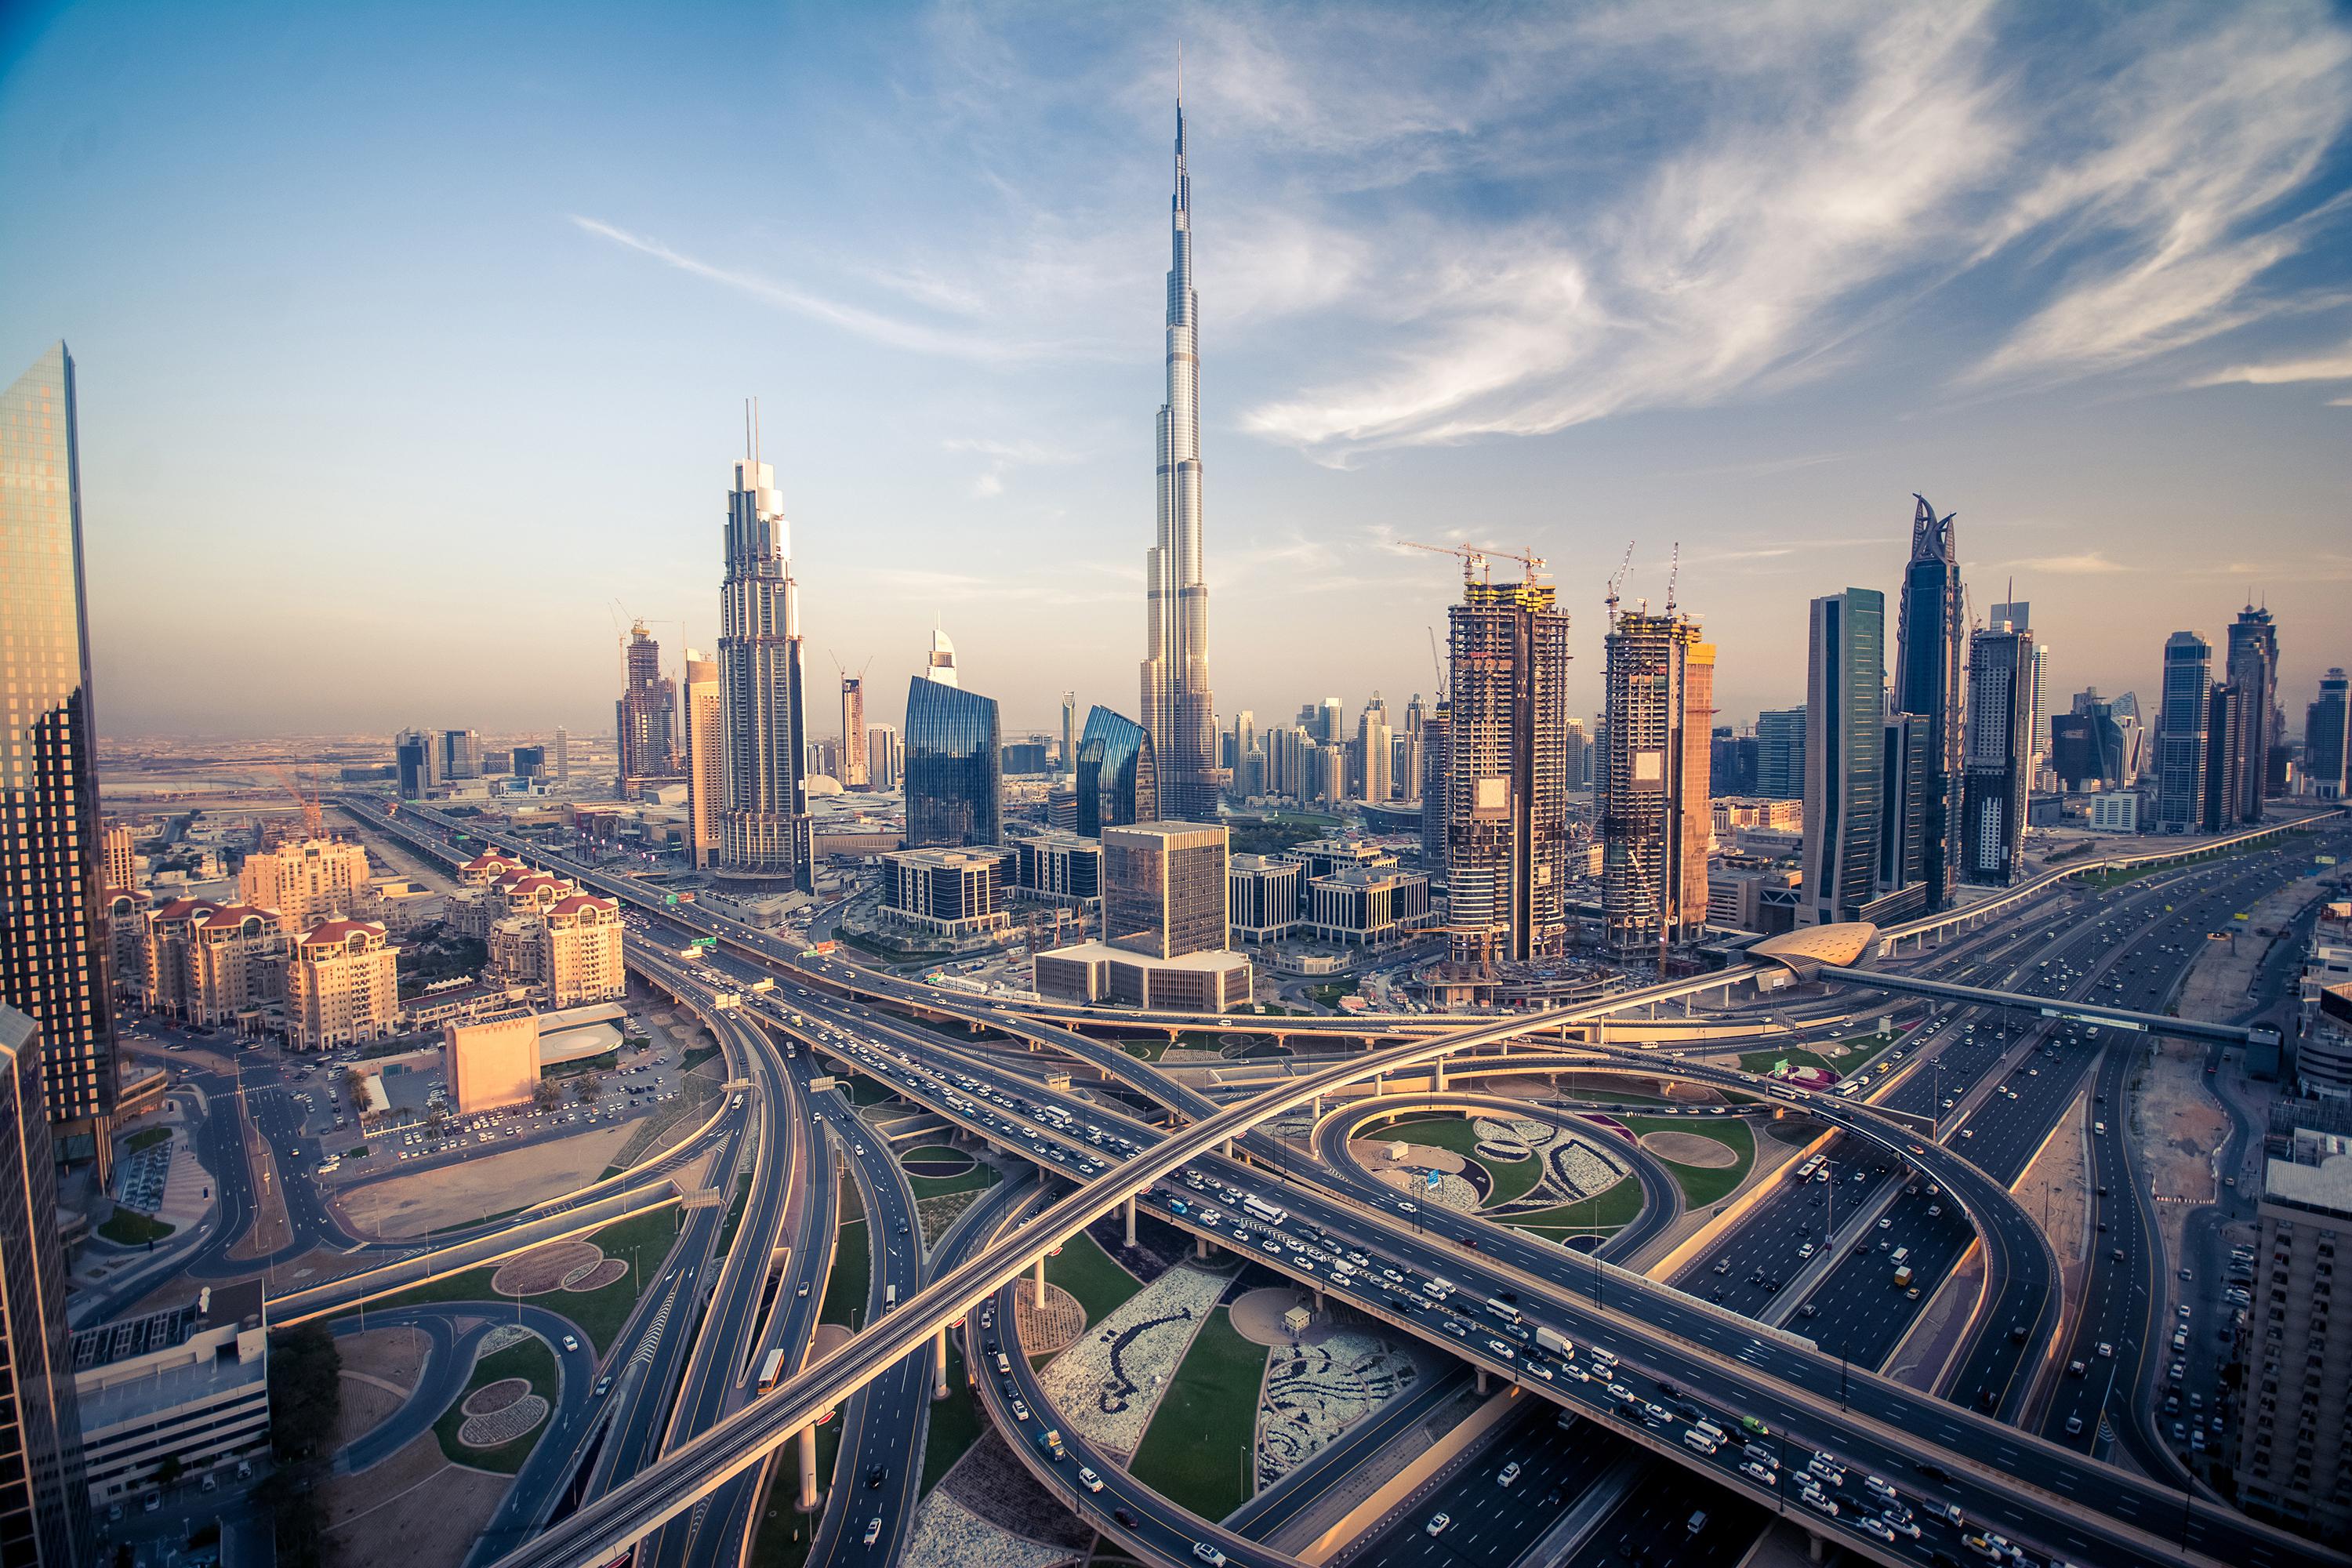 The Dubai city, cover photo